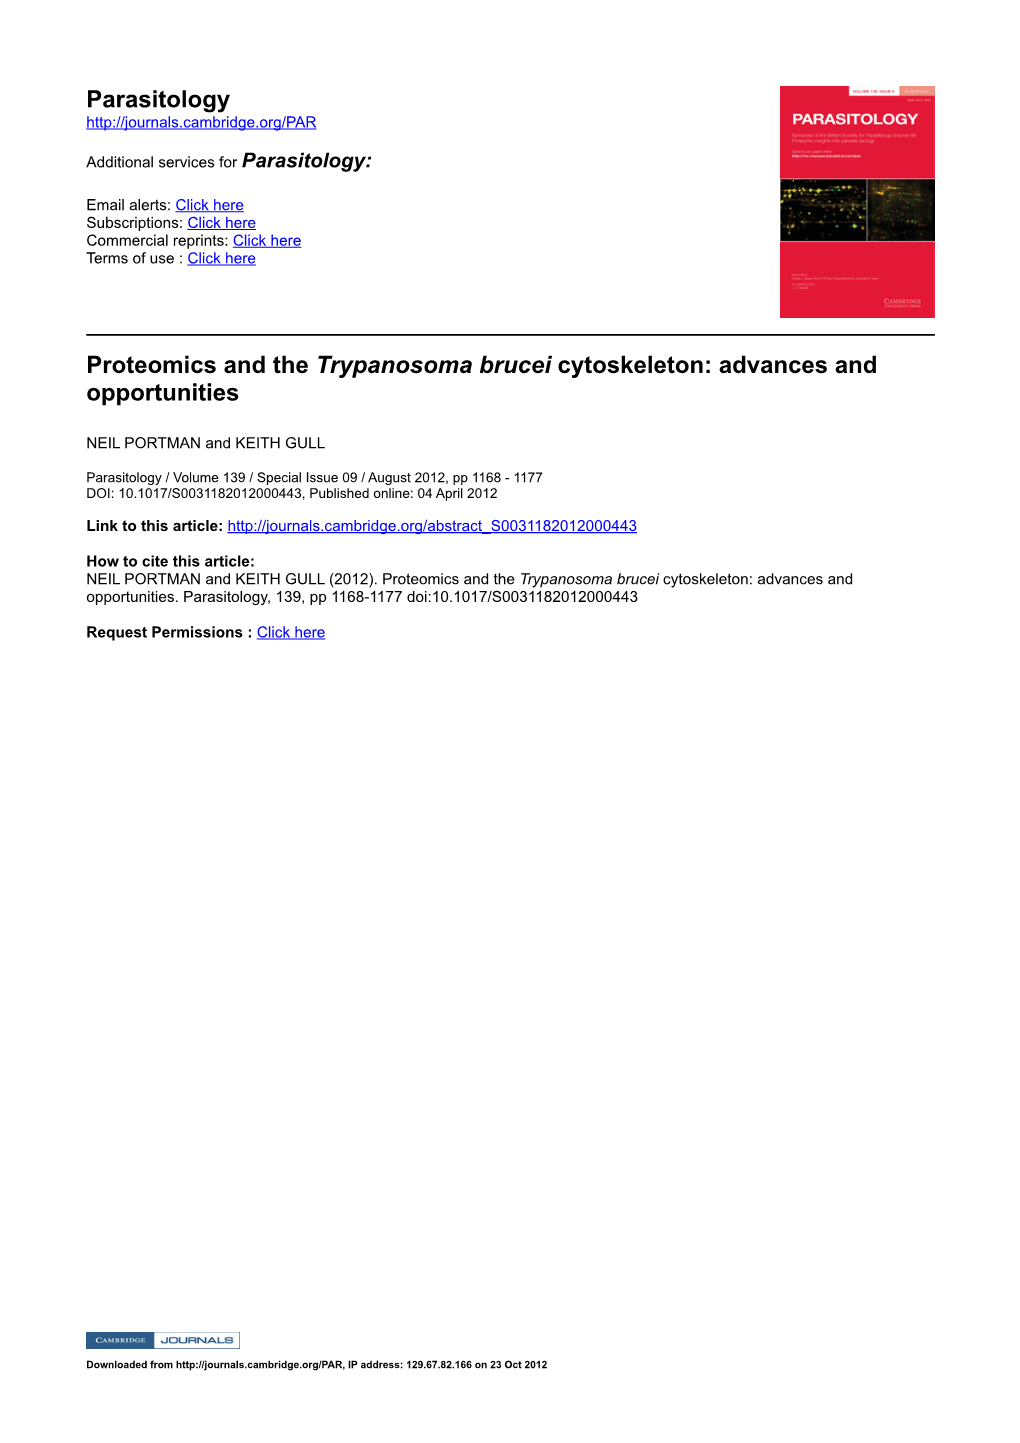 Parasitology Proteomics and the Trypanosoma Brucei Cytoskeleton